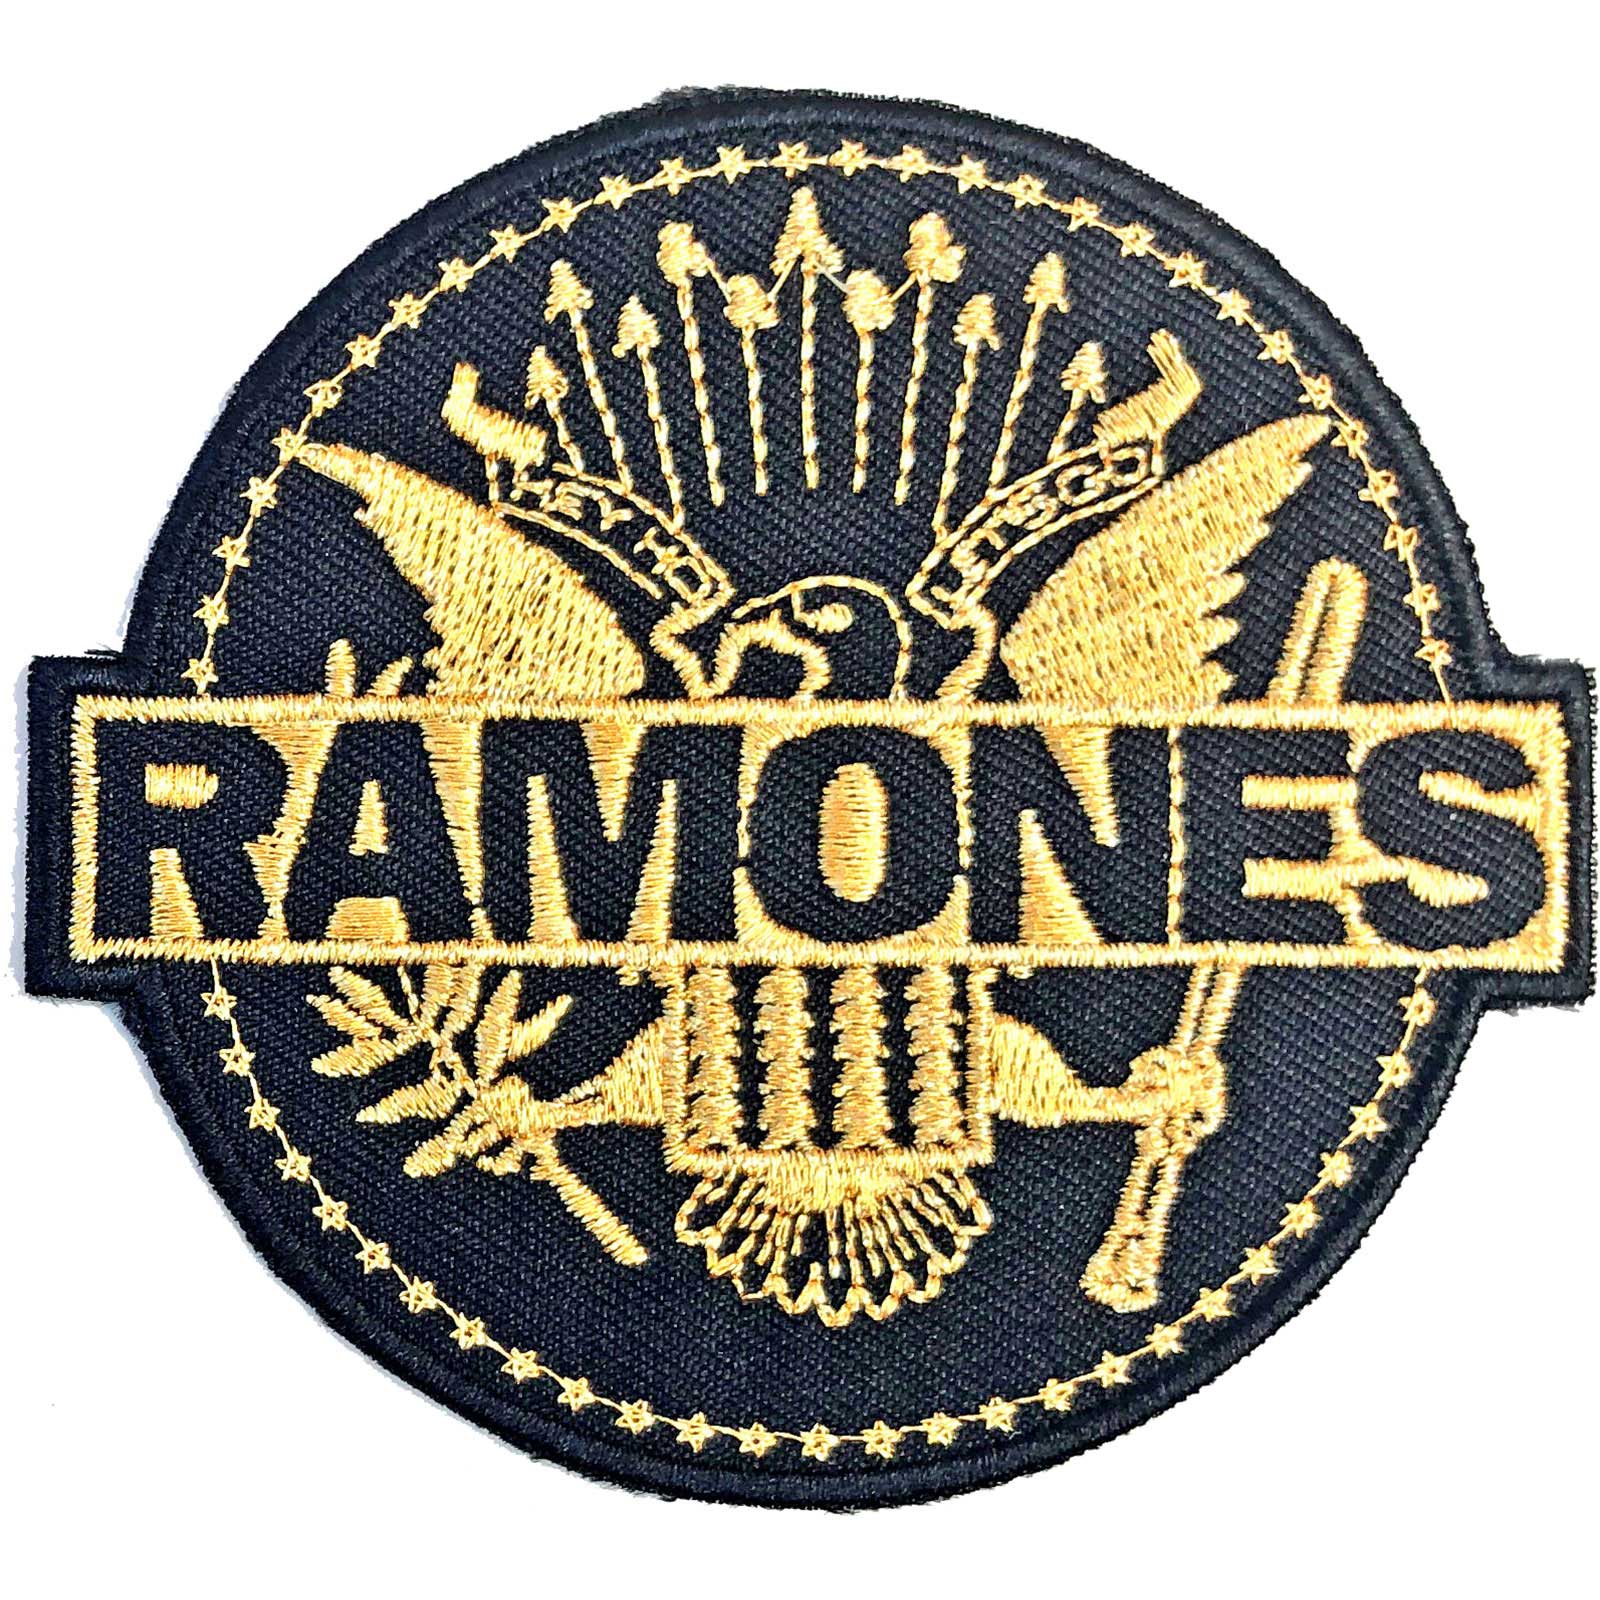 RAMONES Gold Seal